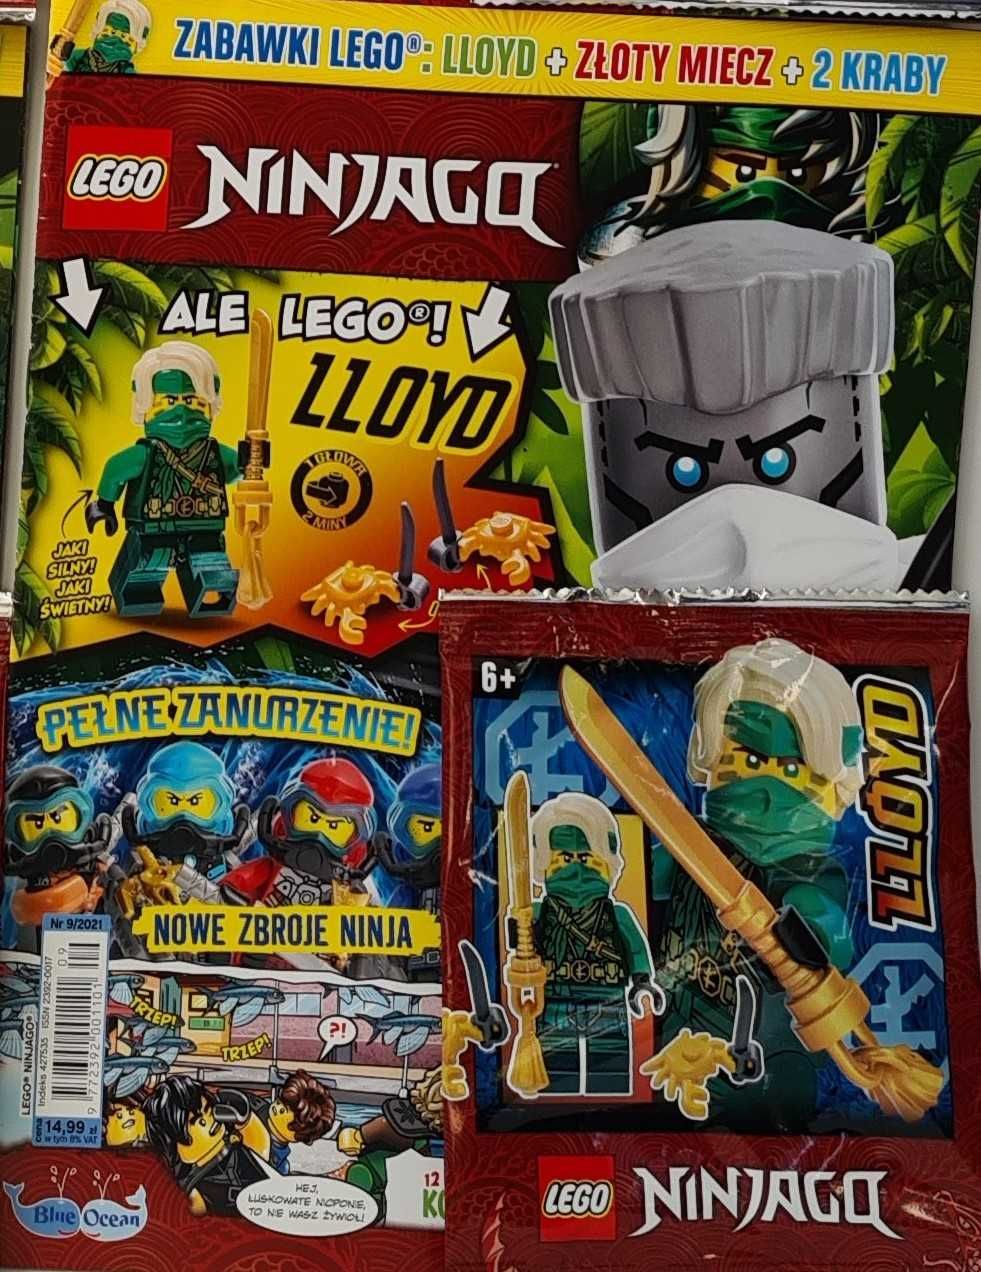 LEGO 892179 NINJAGO 9/2021 Lloyd+miecz+KRAB njo711